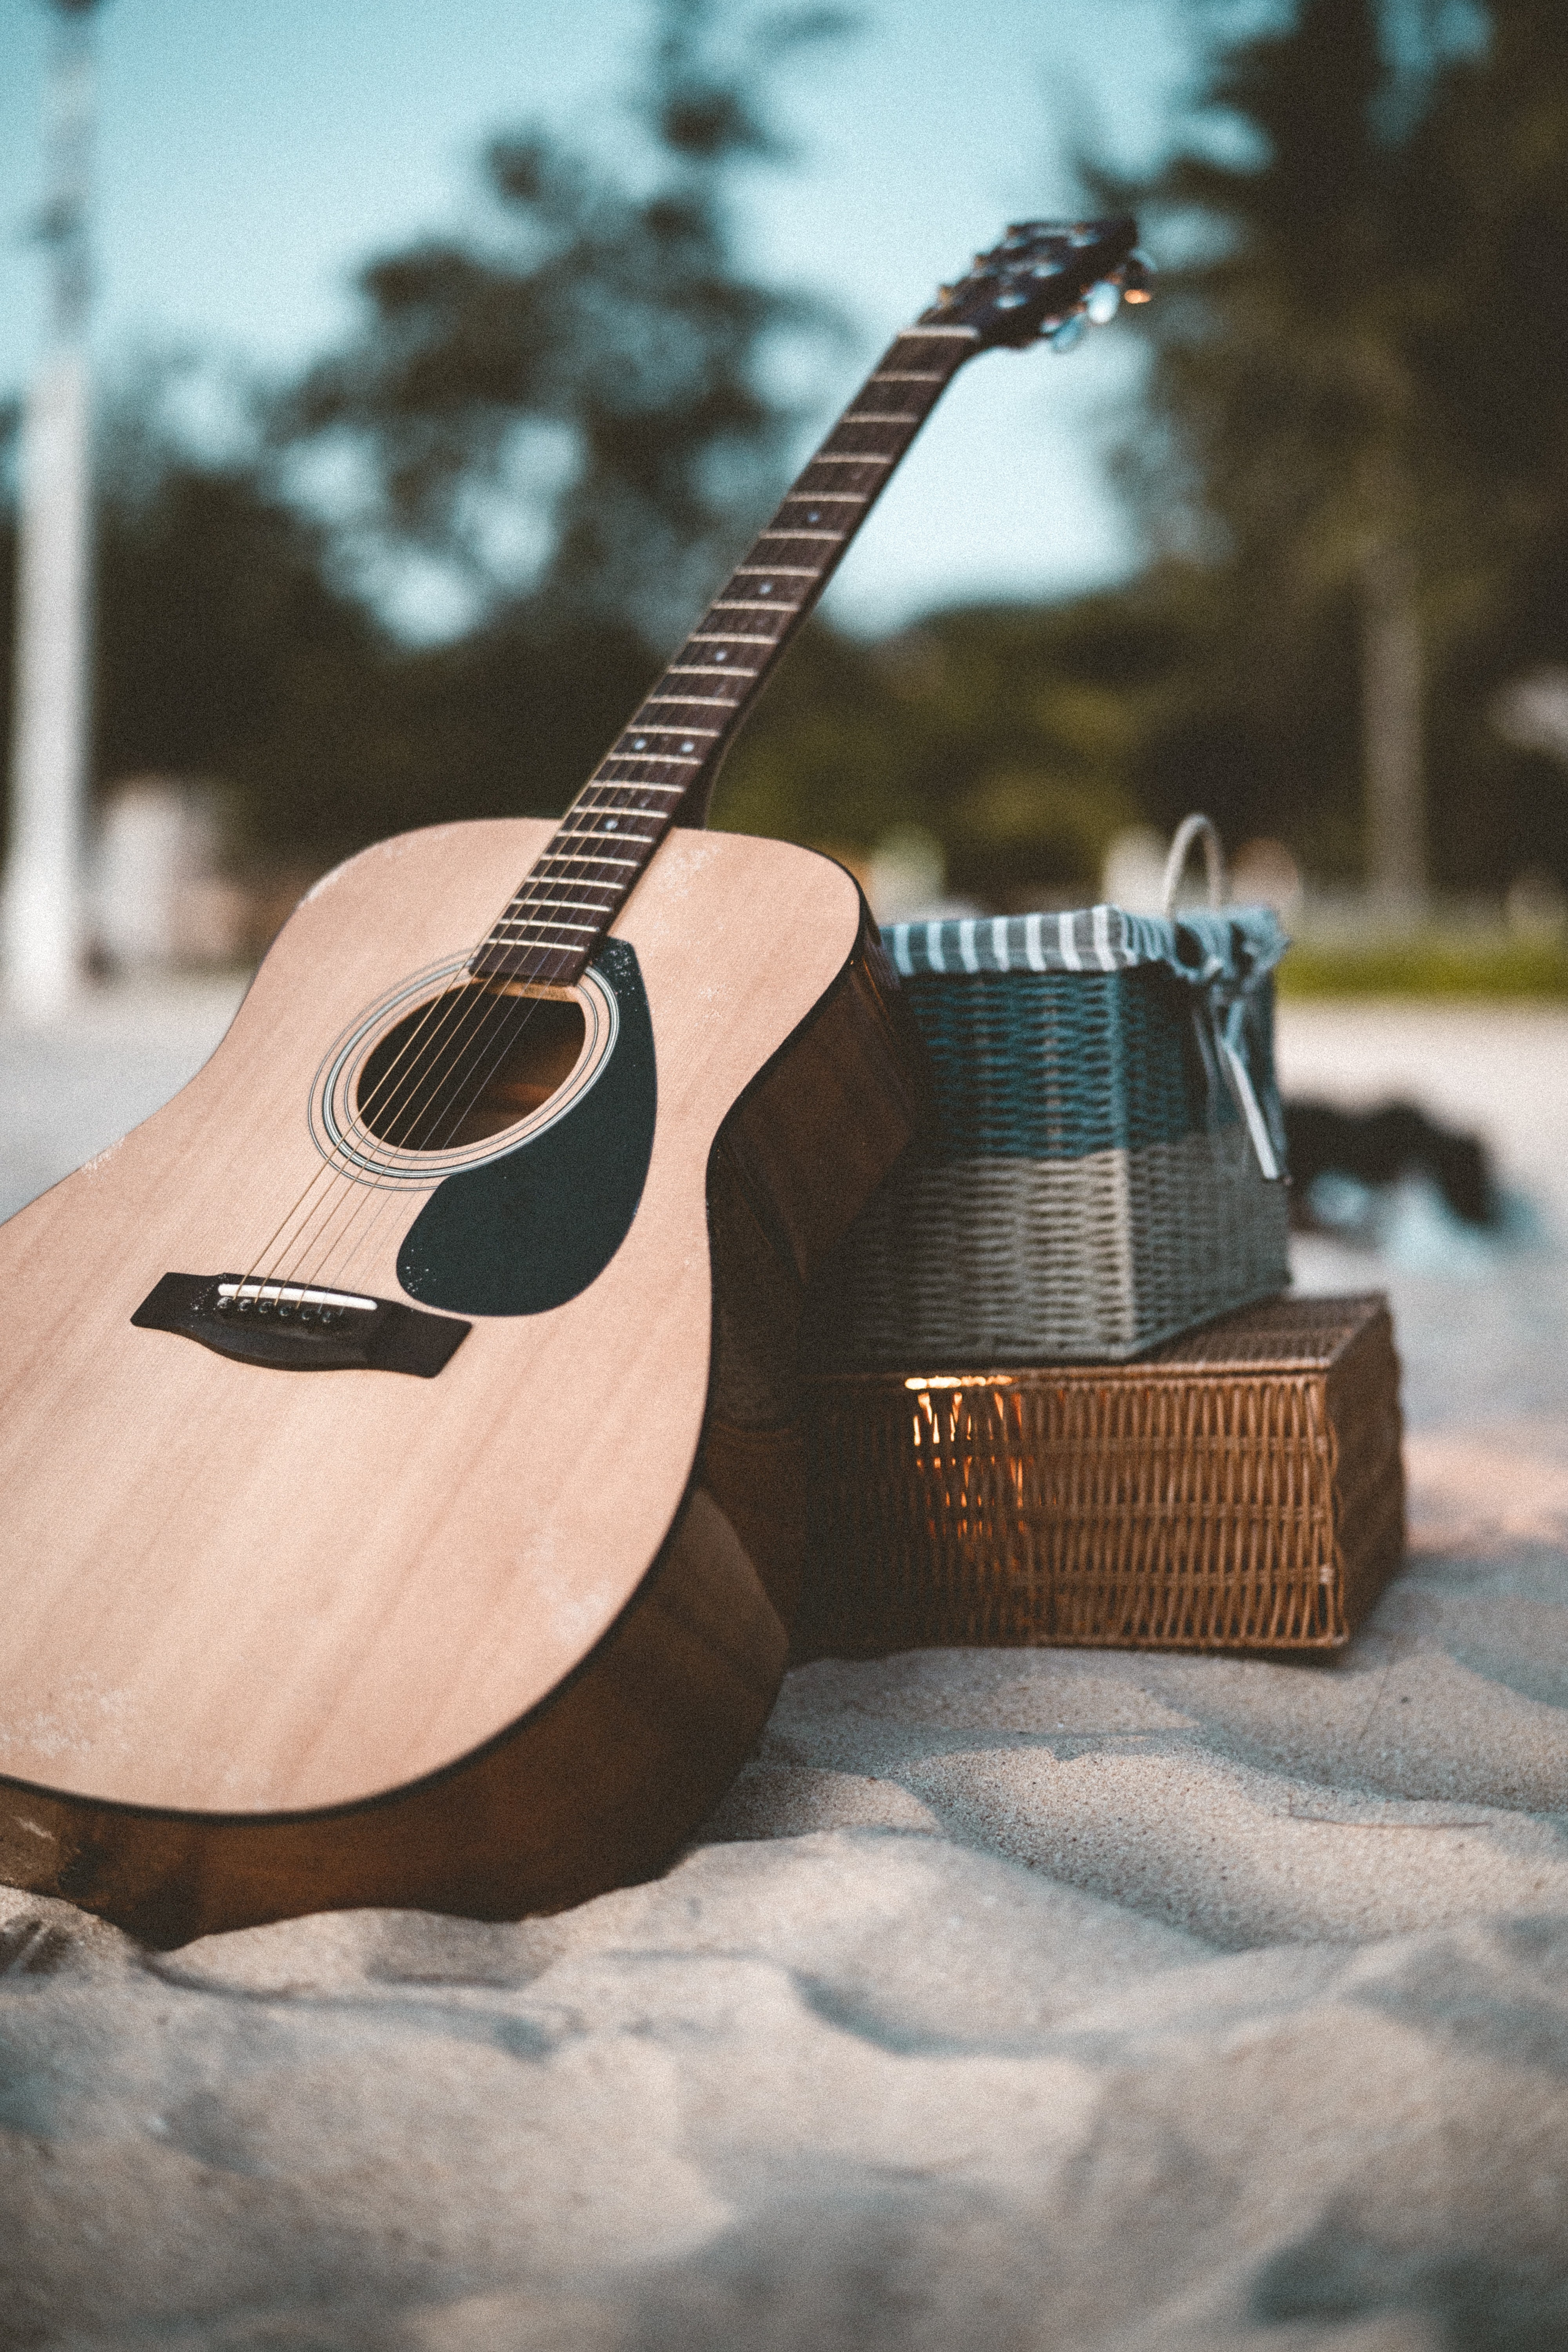 guitar, acoustic guitar, music, sand, brown, musical instrument